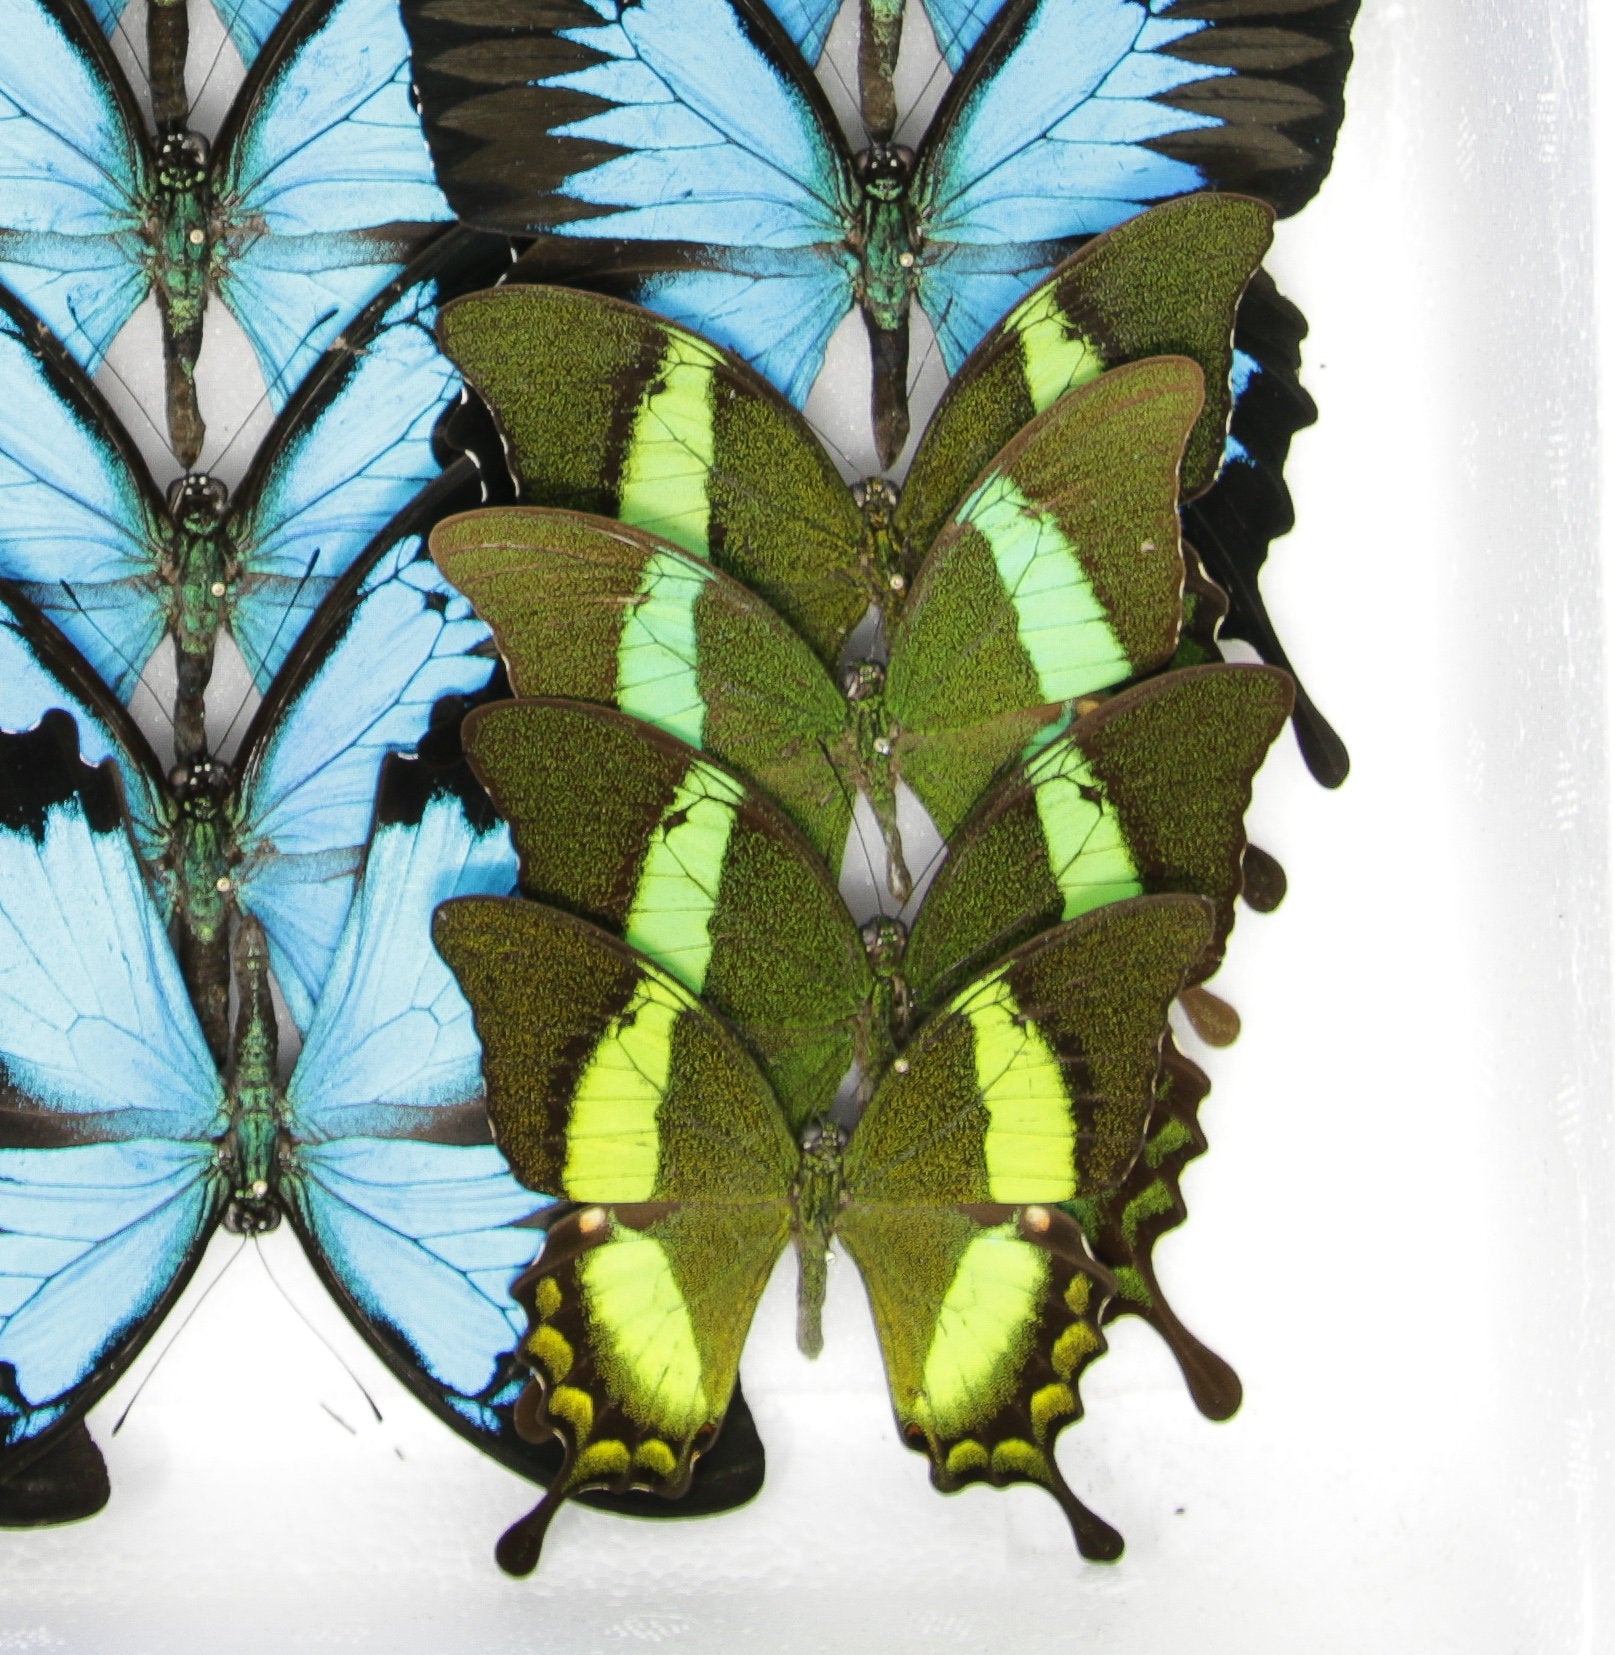 1 x Emerald Swallowtail | WINGS SPREAD | A1 Papilio palinurus daedalus | Set Butterfly Specimen Pinned in Box